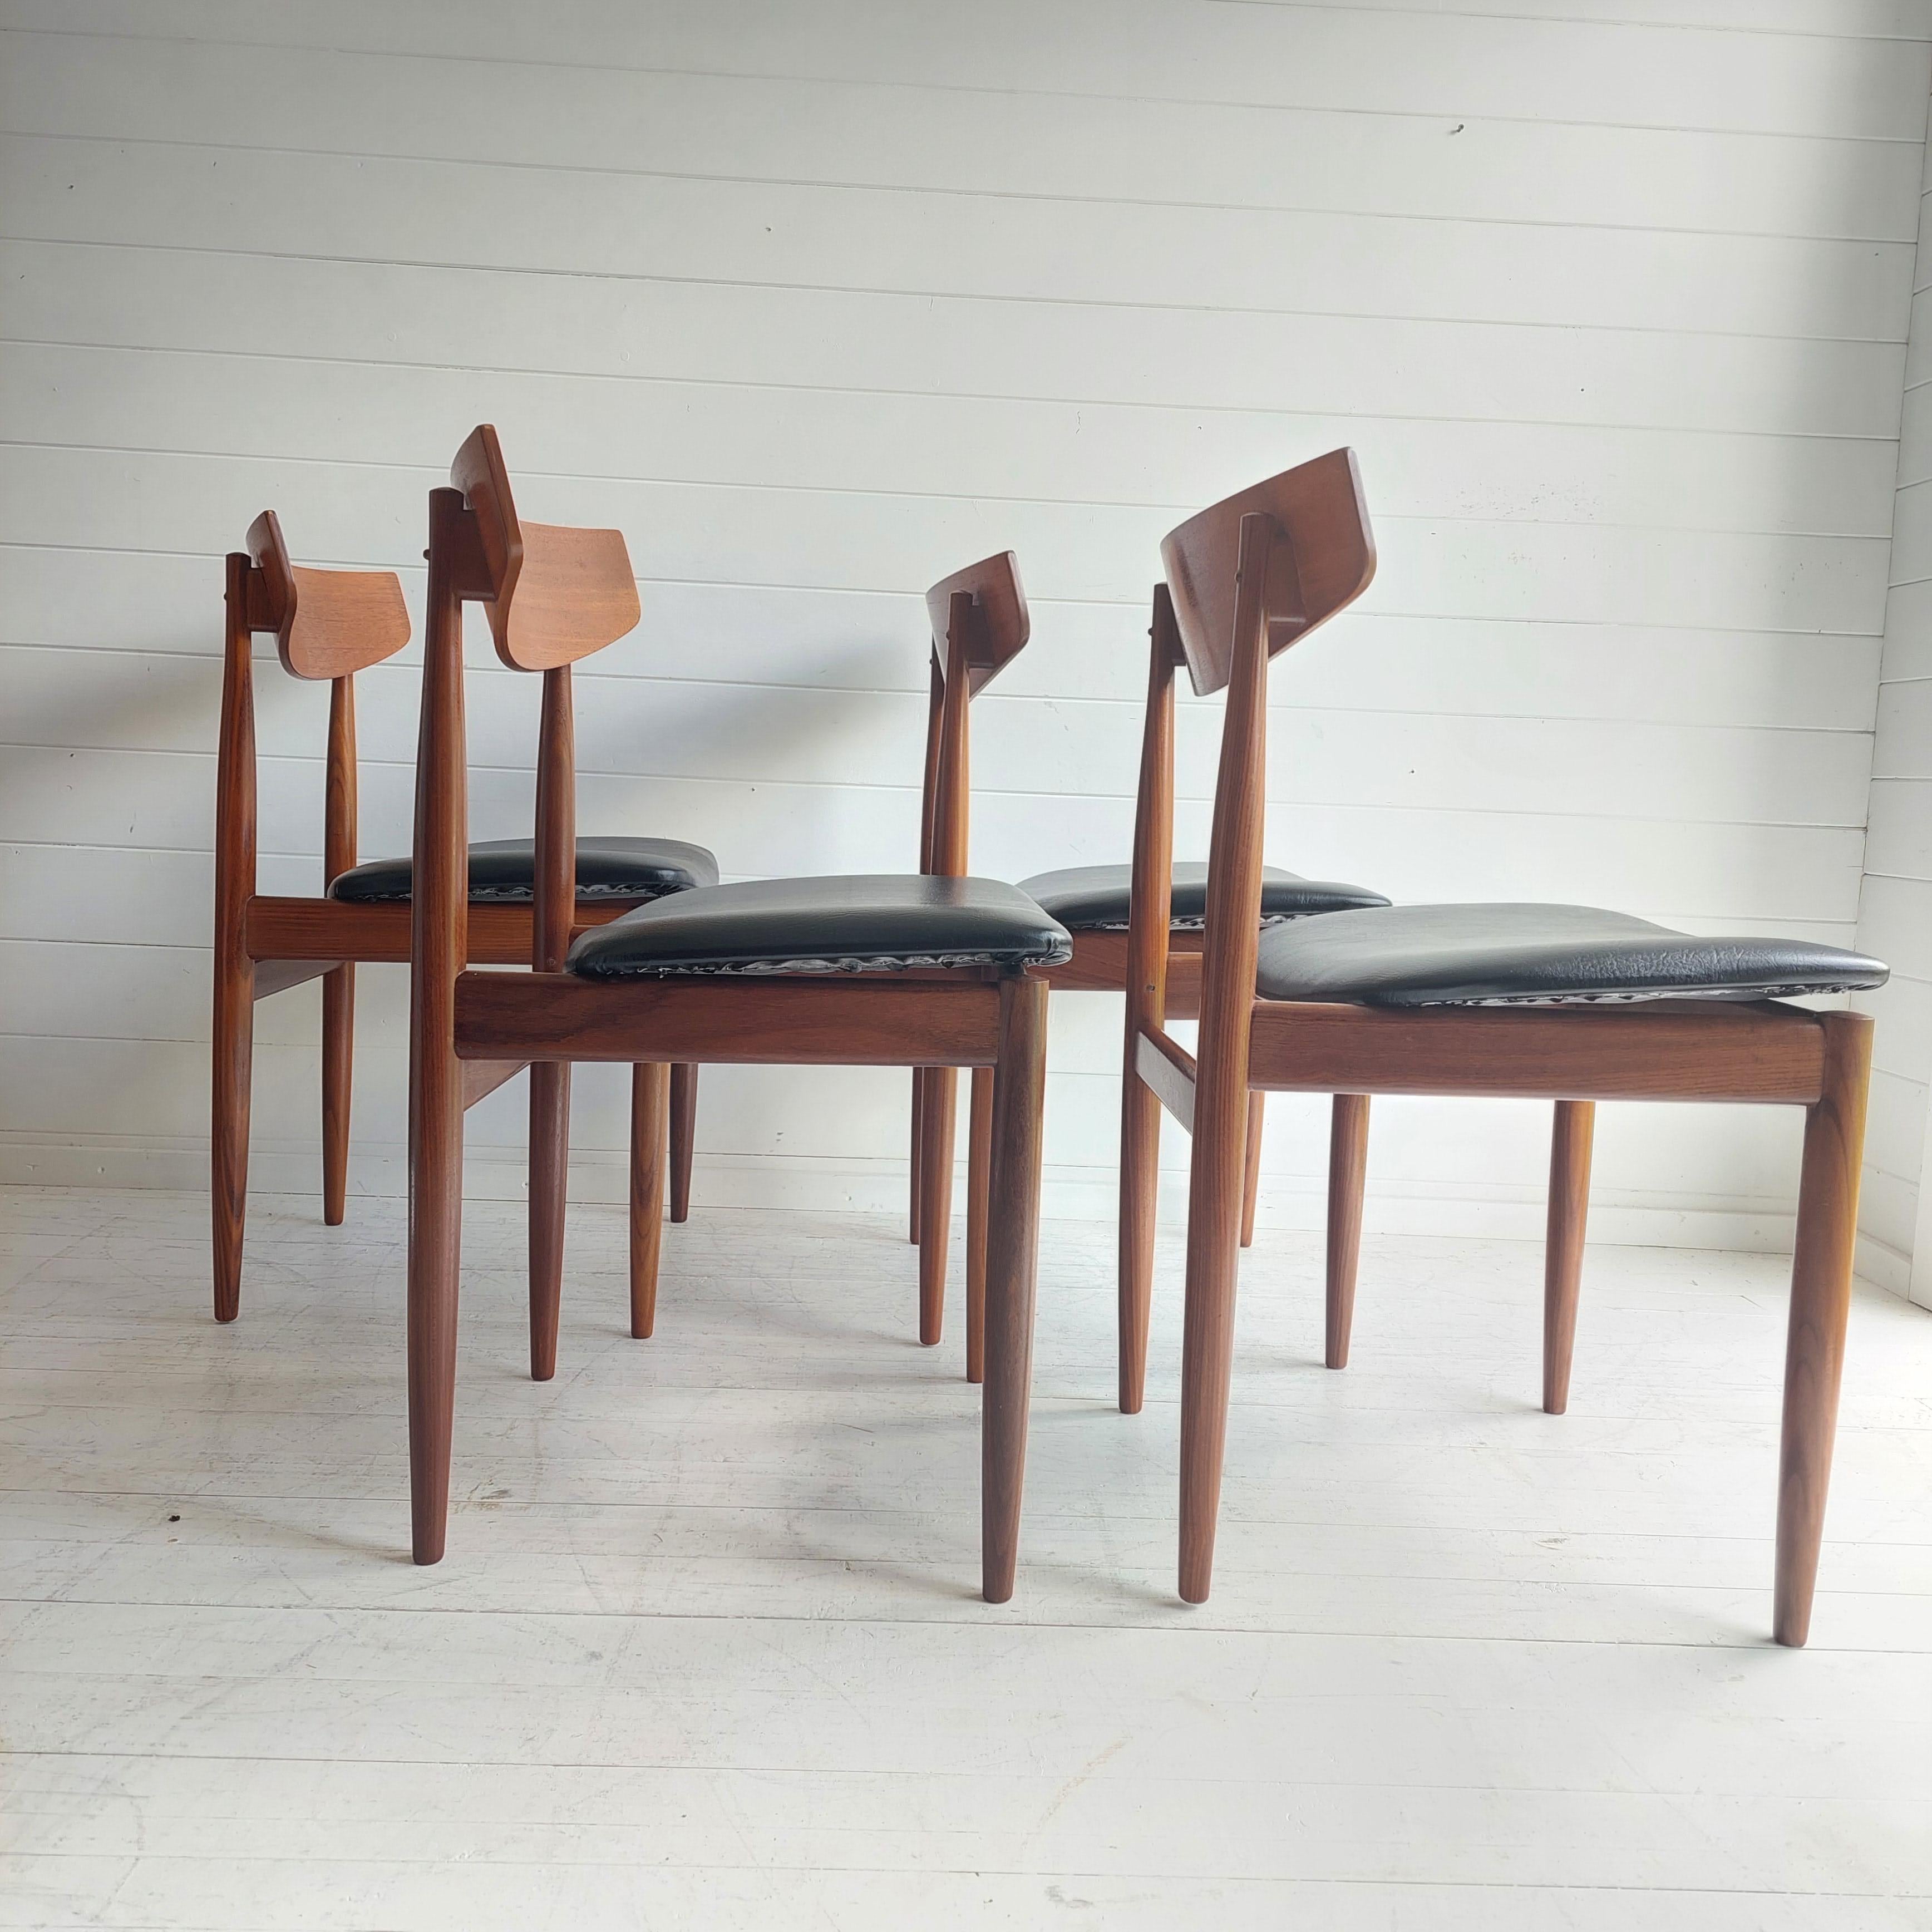 20th Century Midcentury Teak Dining Chairs Danish by Ib Kofod Larsen for G Plan Set of 4